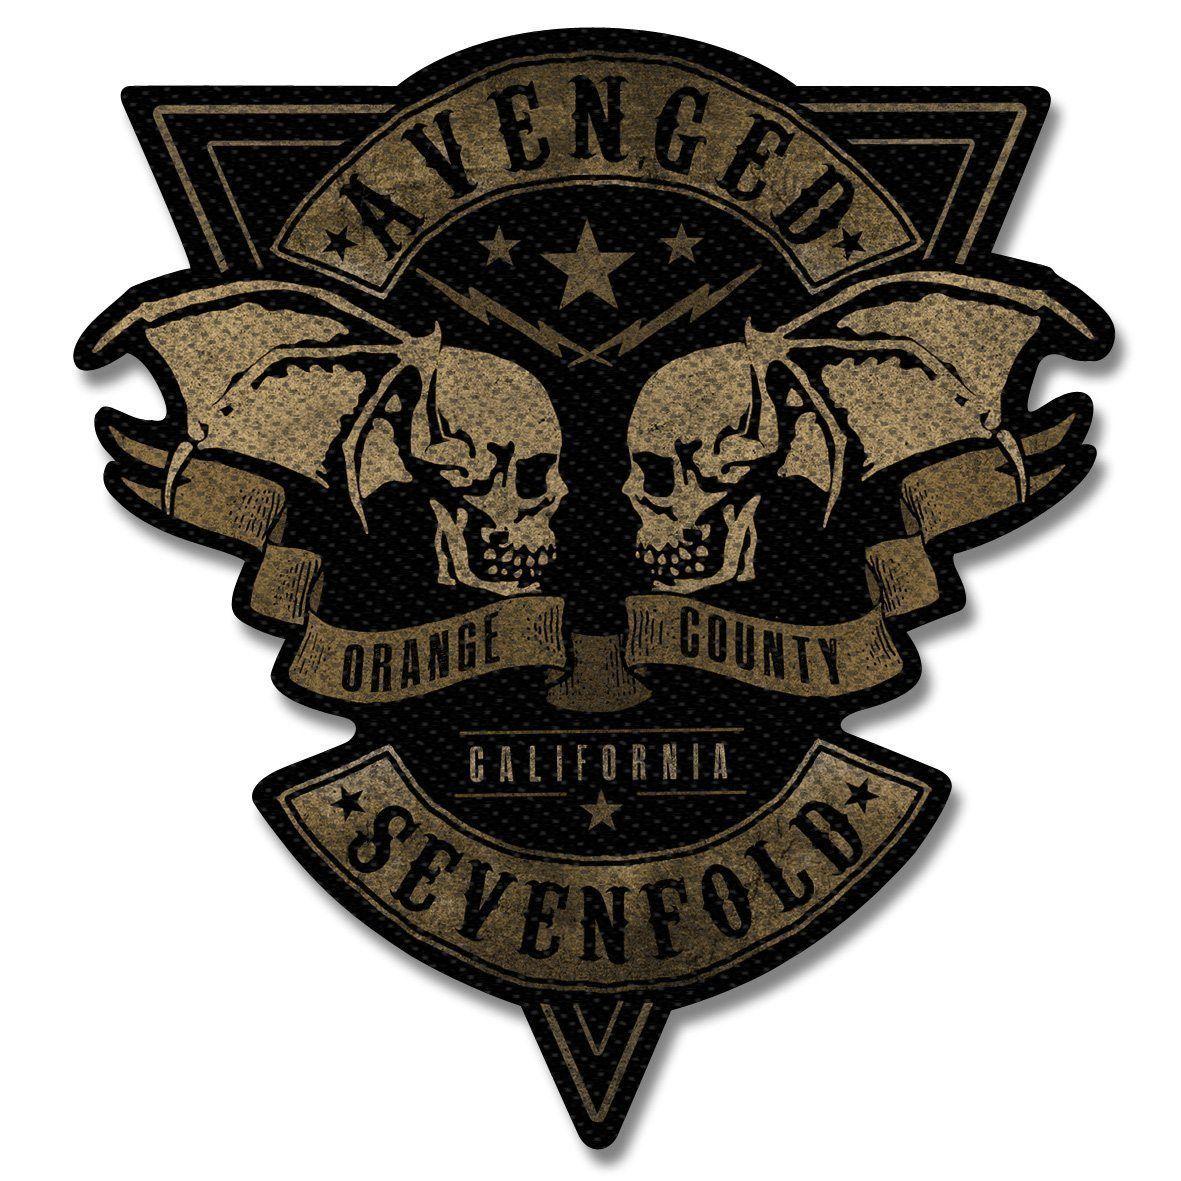 Avenged Sevenfold Logo - Avenged Sevenfold Patch Orange County Cut Out